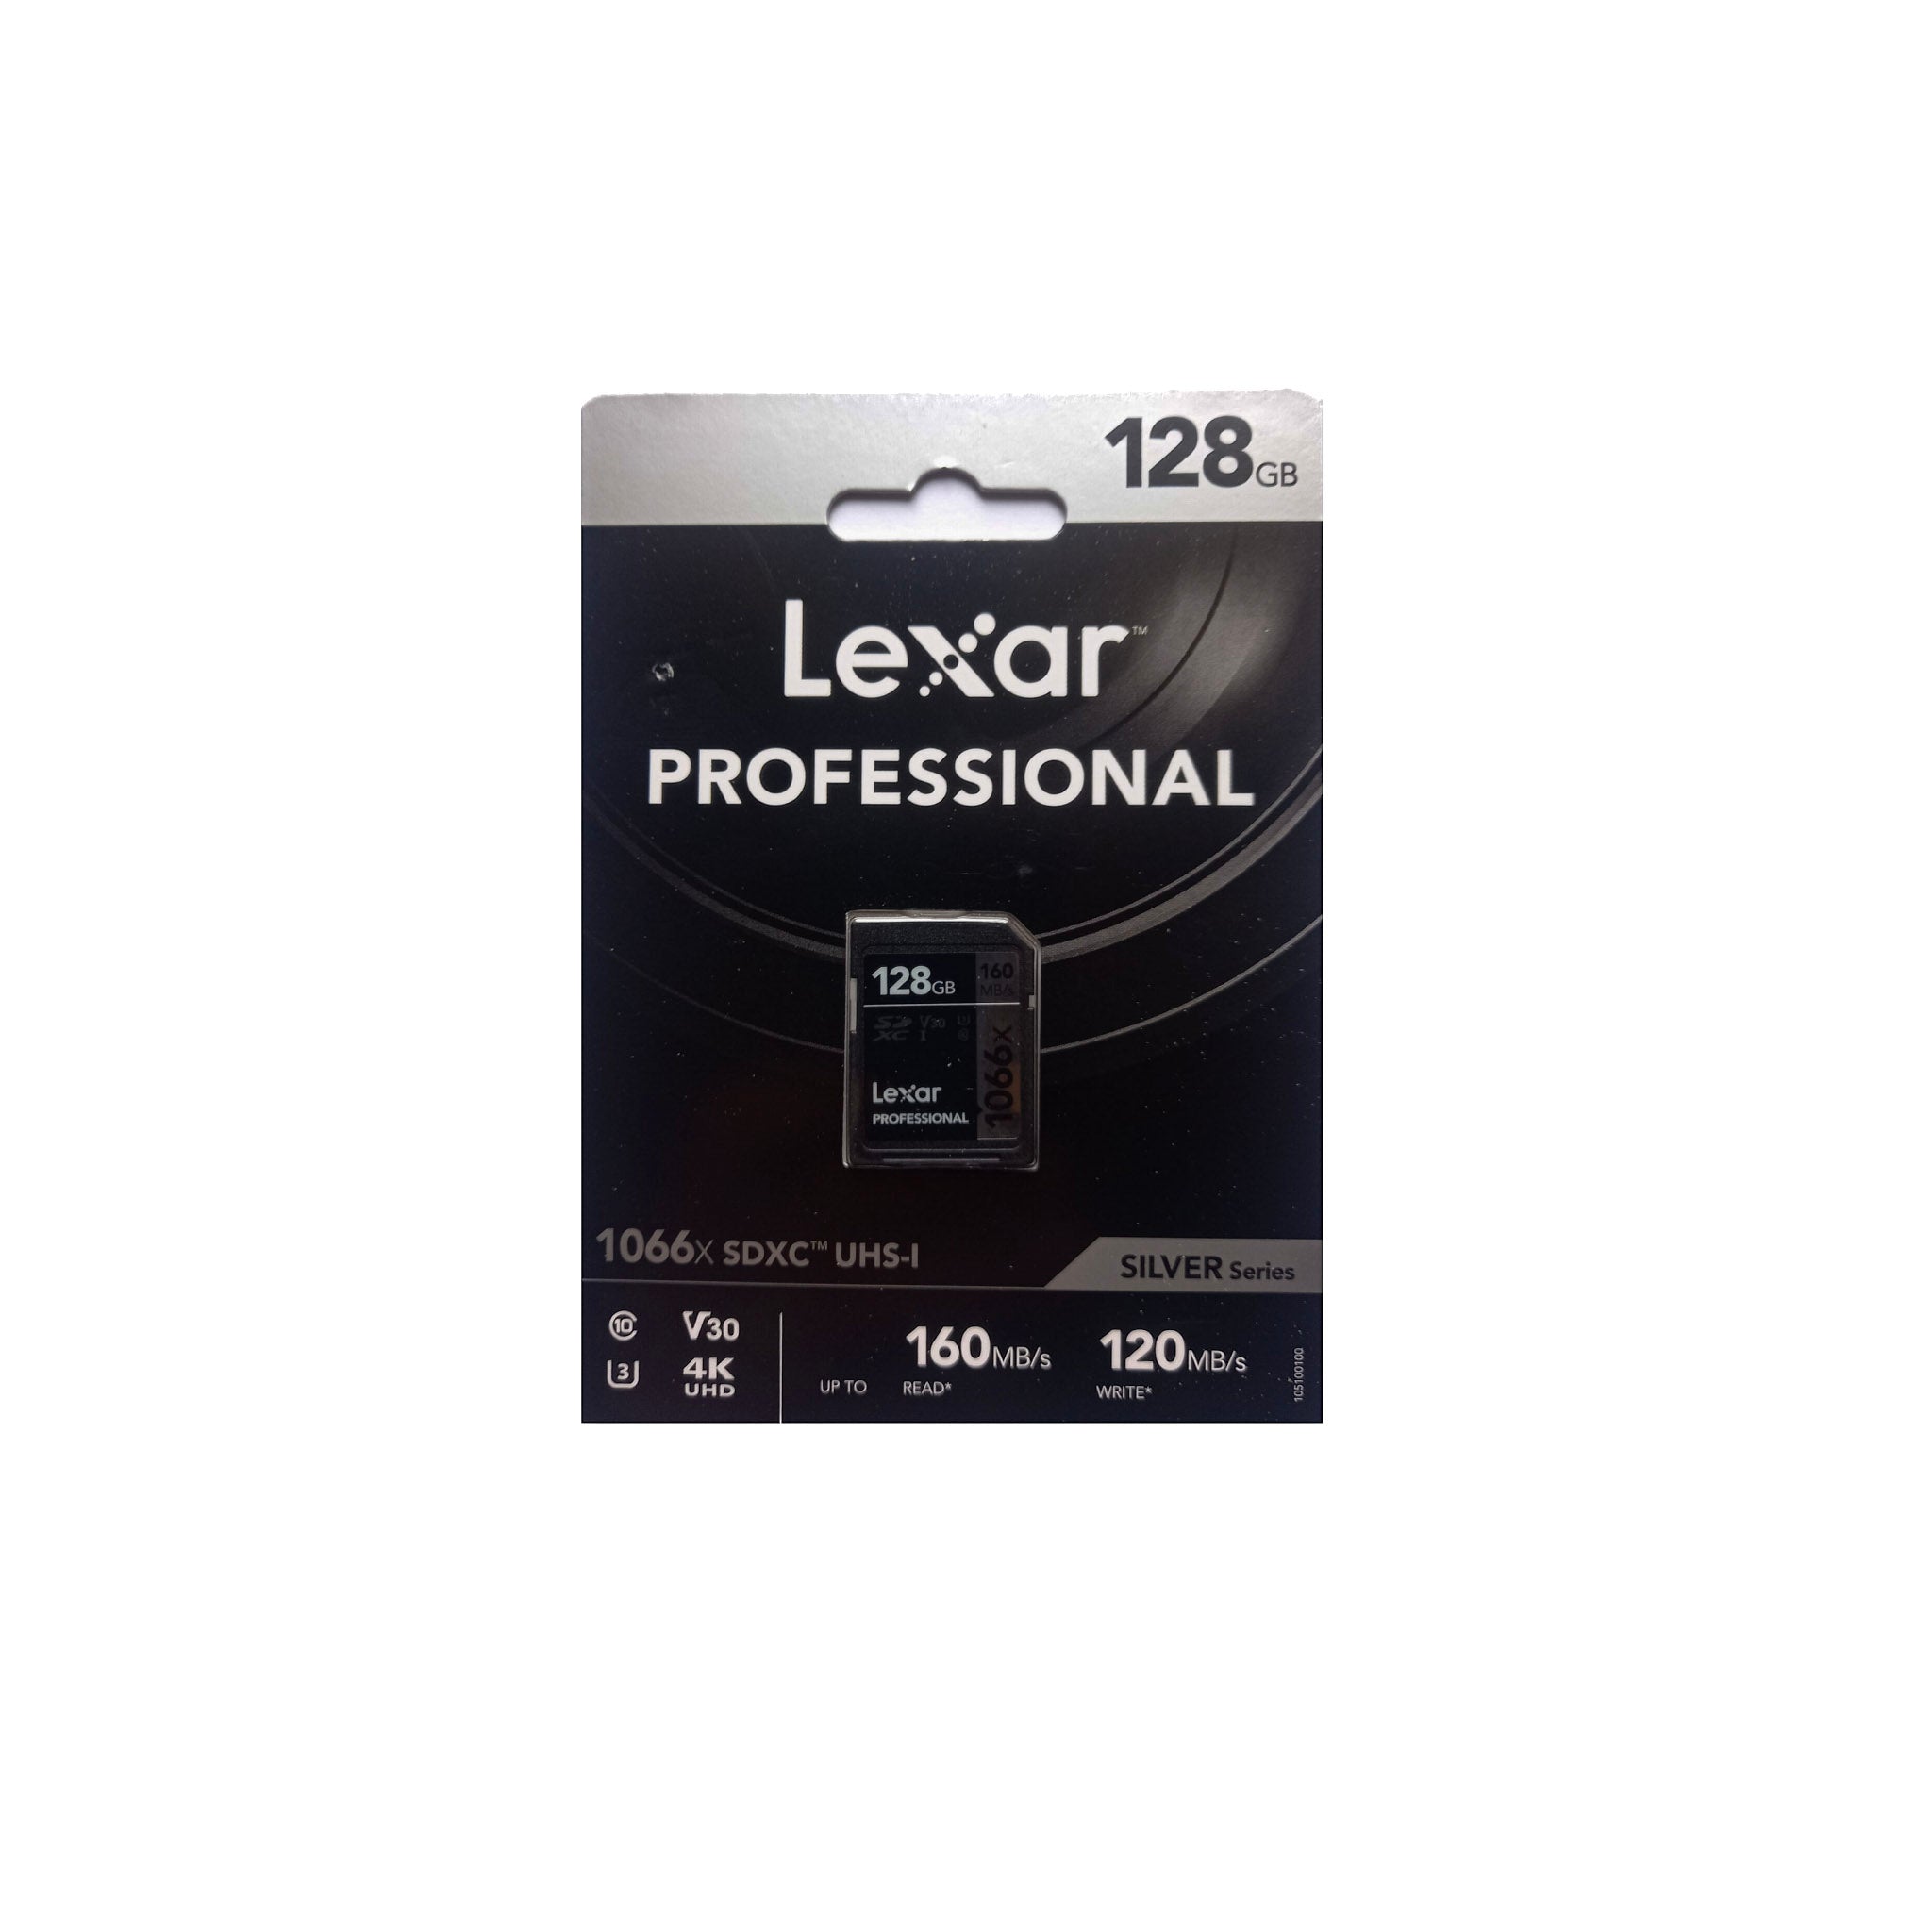 Lexar 128 GB SDXC Card Professional UHS-1 (Silver Series)